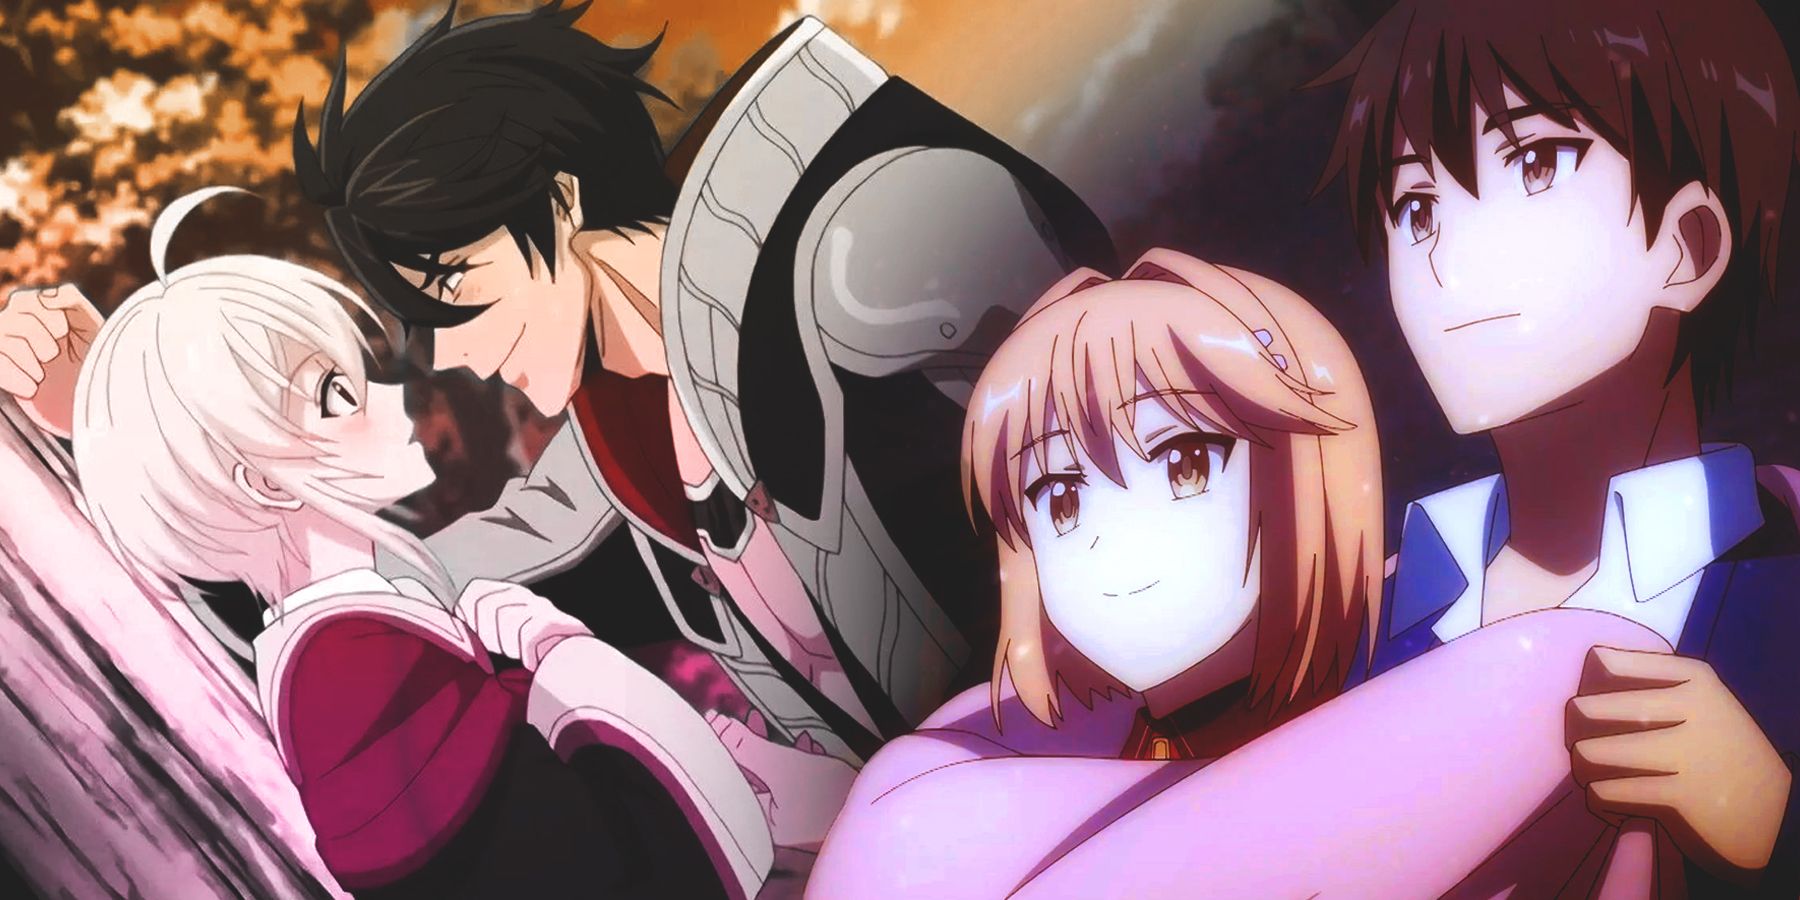 15 Isekai Anime With The Best Romances